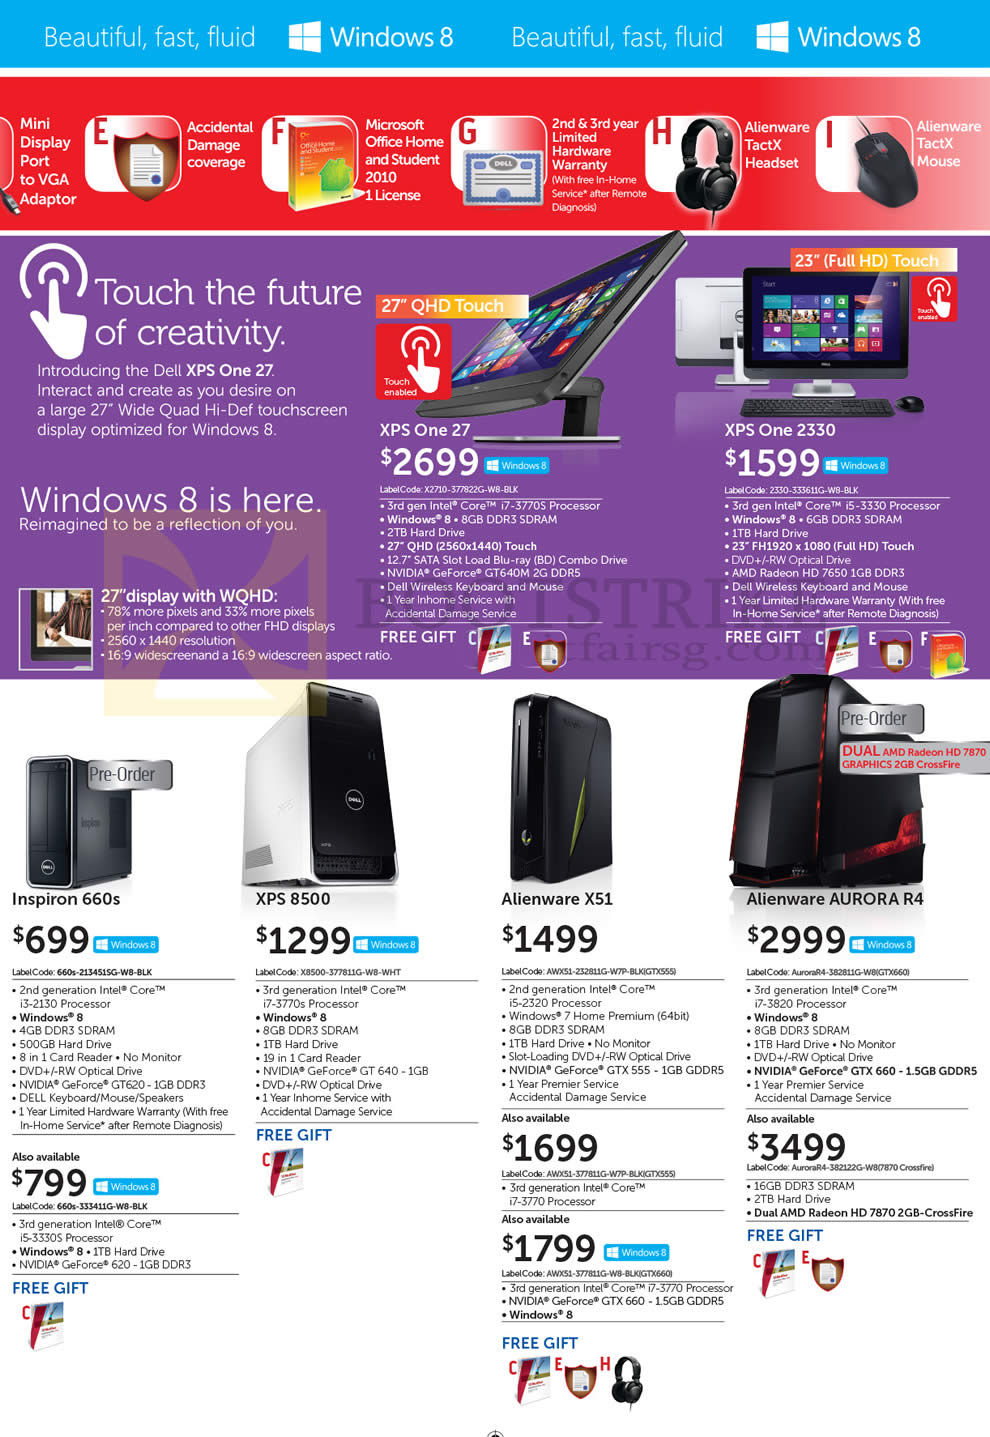 SITEX 2012 price list image brochure of Dell Desktop PCs One 27, One 2330, Inspiron 660s, XPS 8500, Alienware X51, Aurora R4